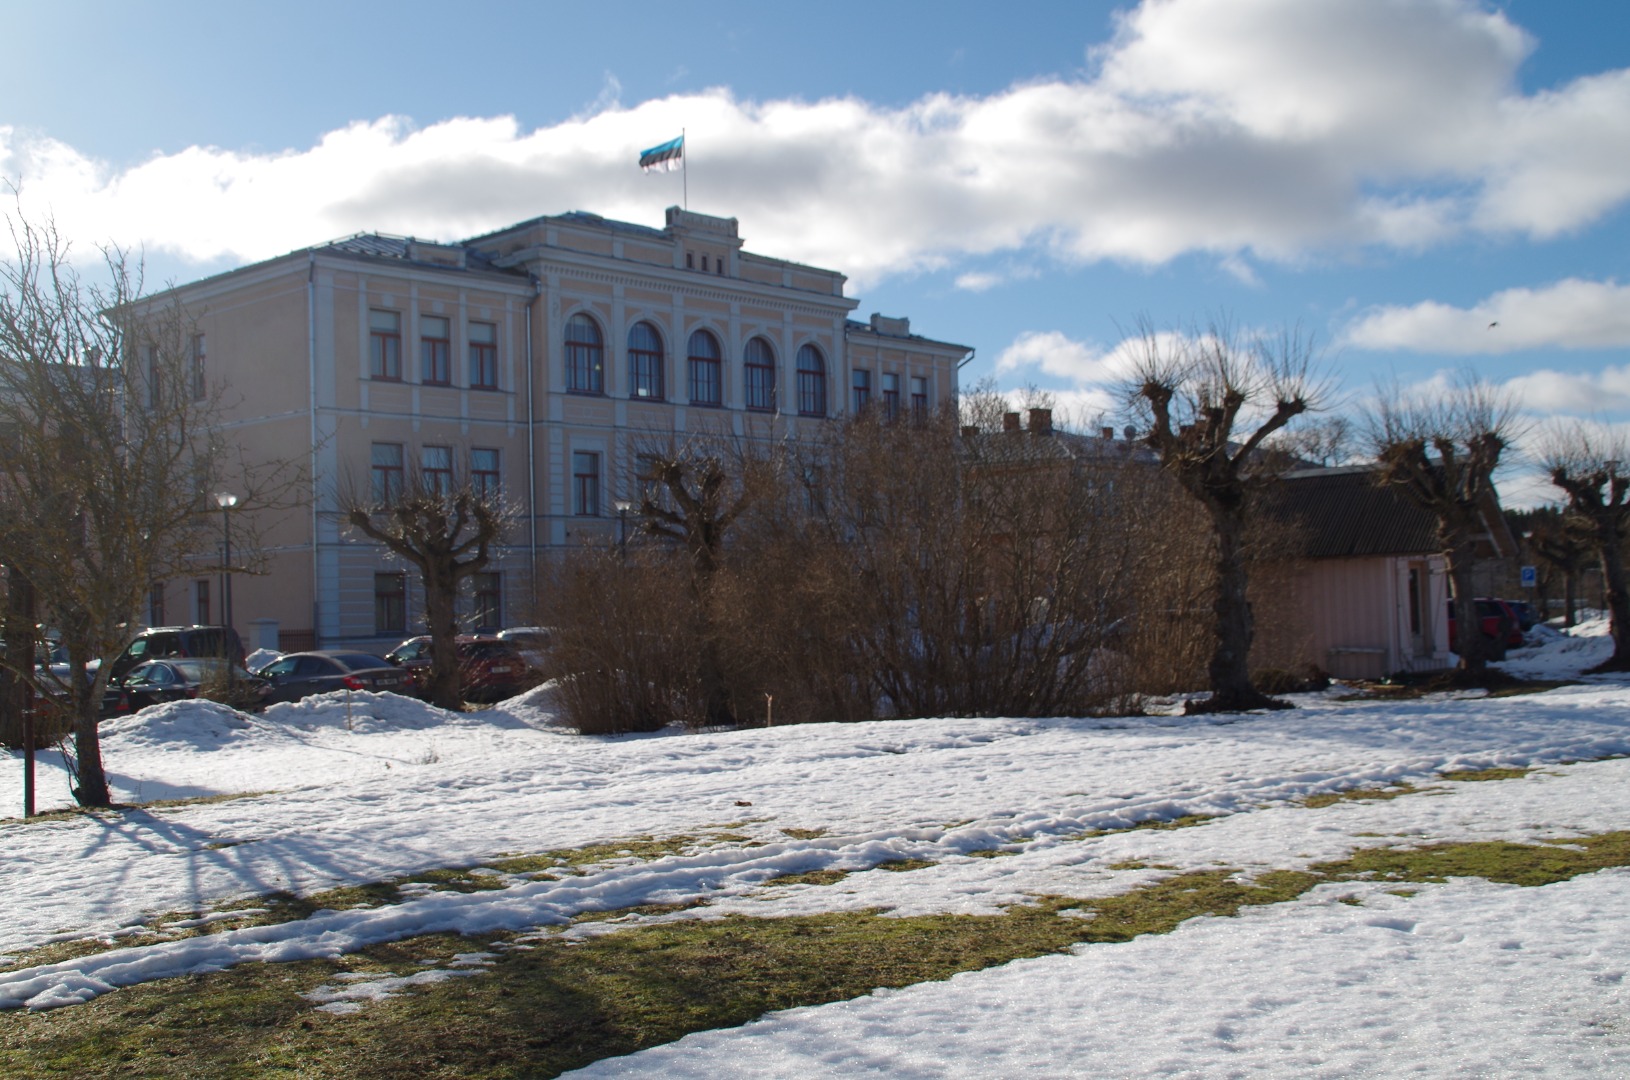 Views of Rakvere Teachers Seminar buildings and interior rooms until 1989 rephoto